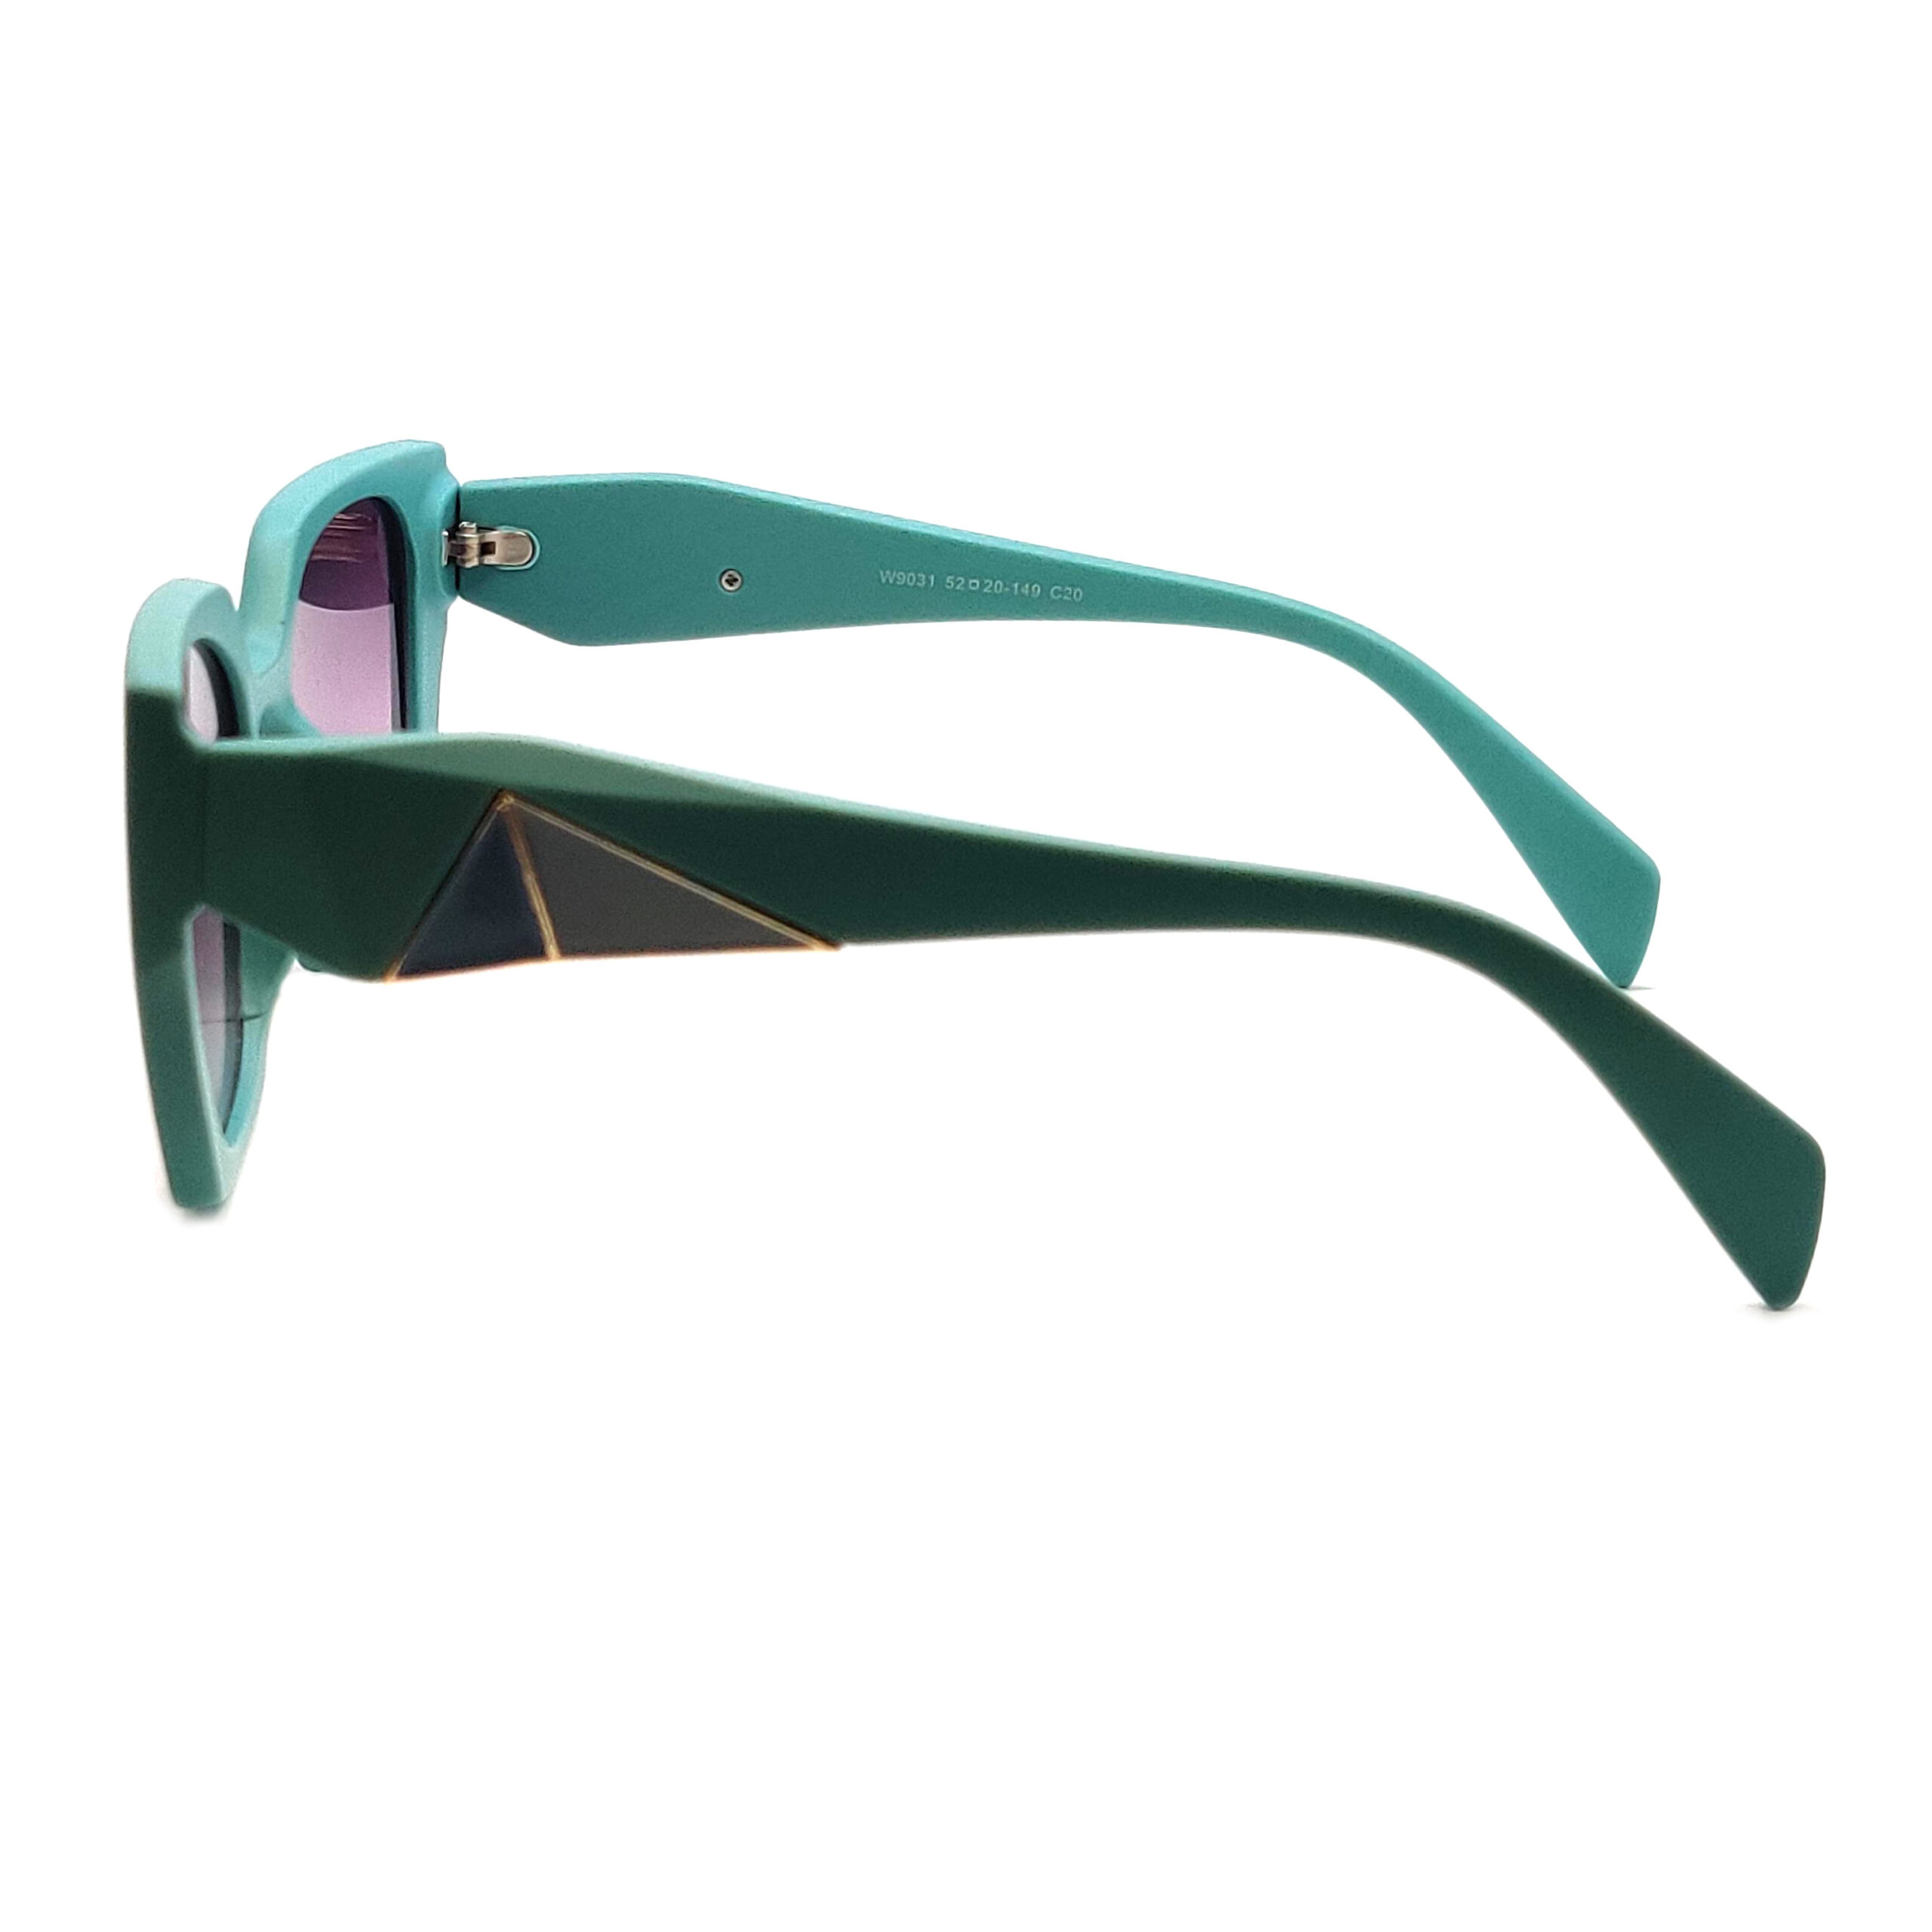 Buy geometric sunglasses online at chashmah.com